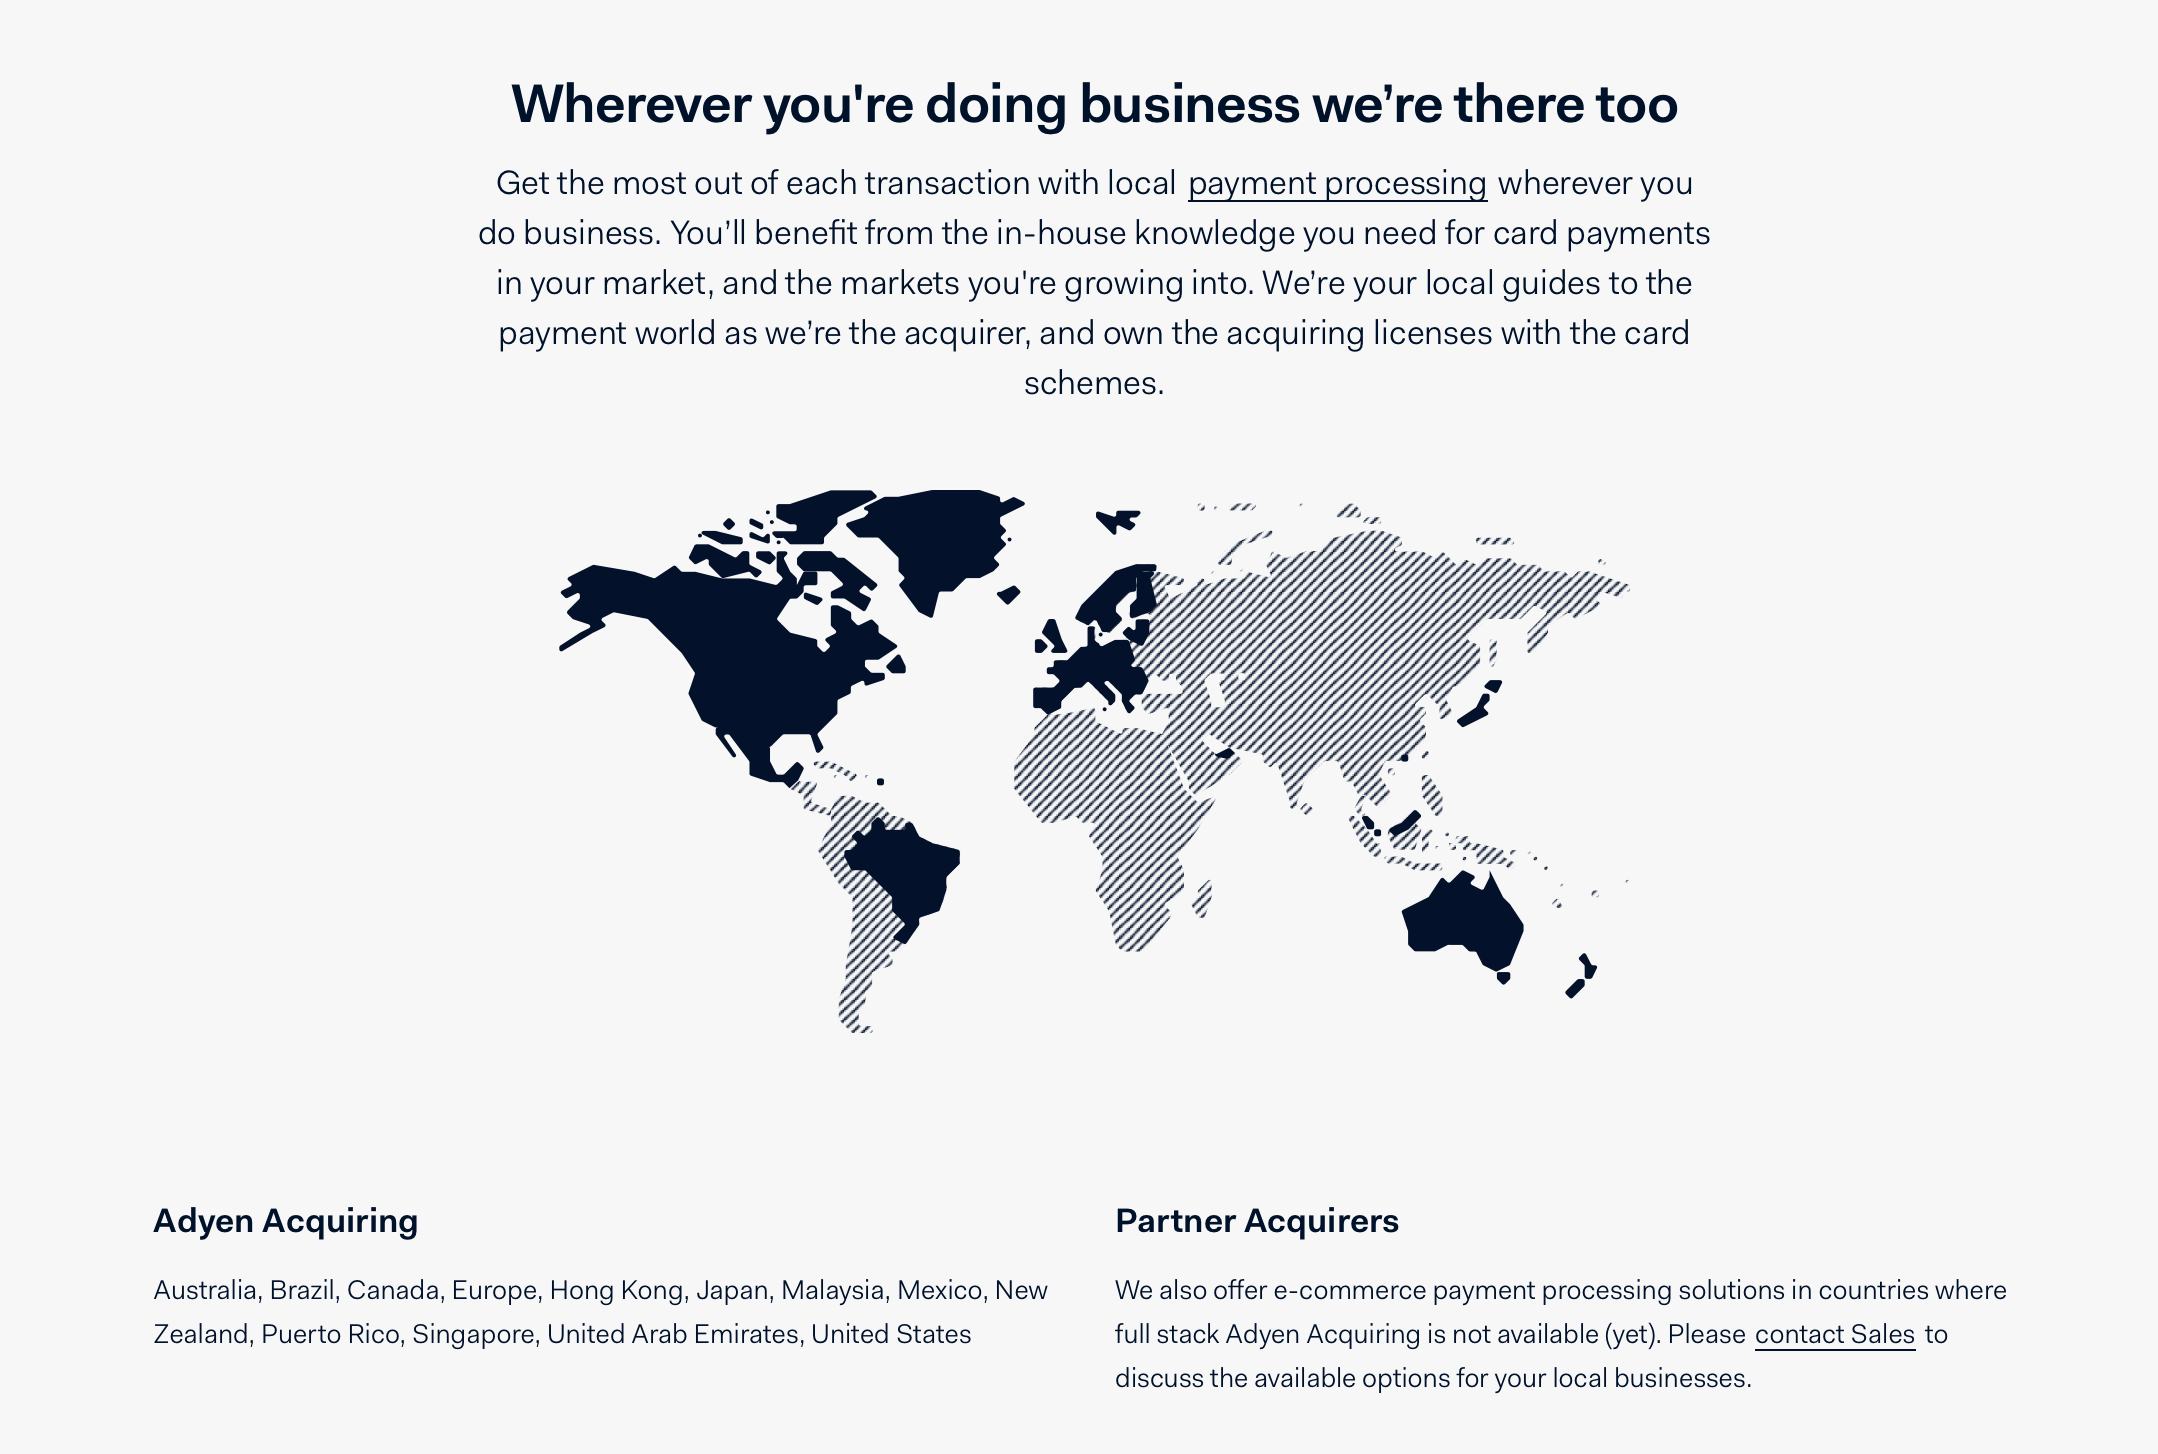 Adyen's map of global acquiring locations